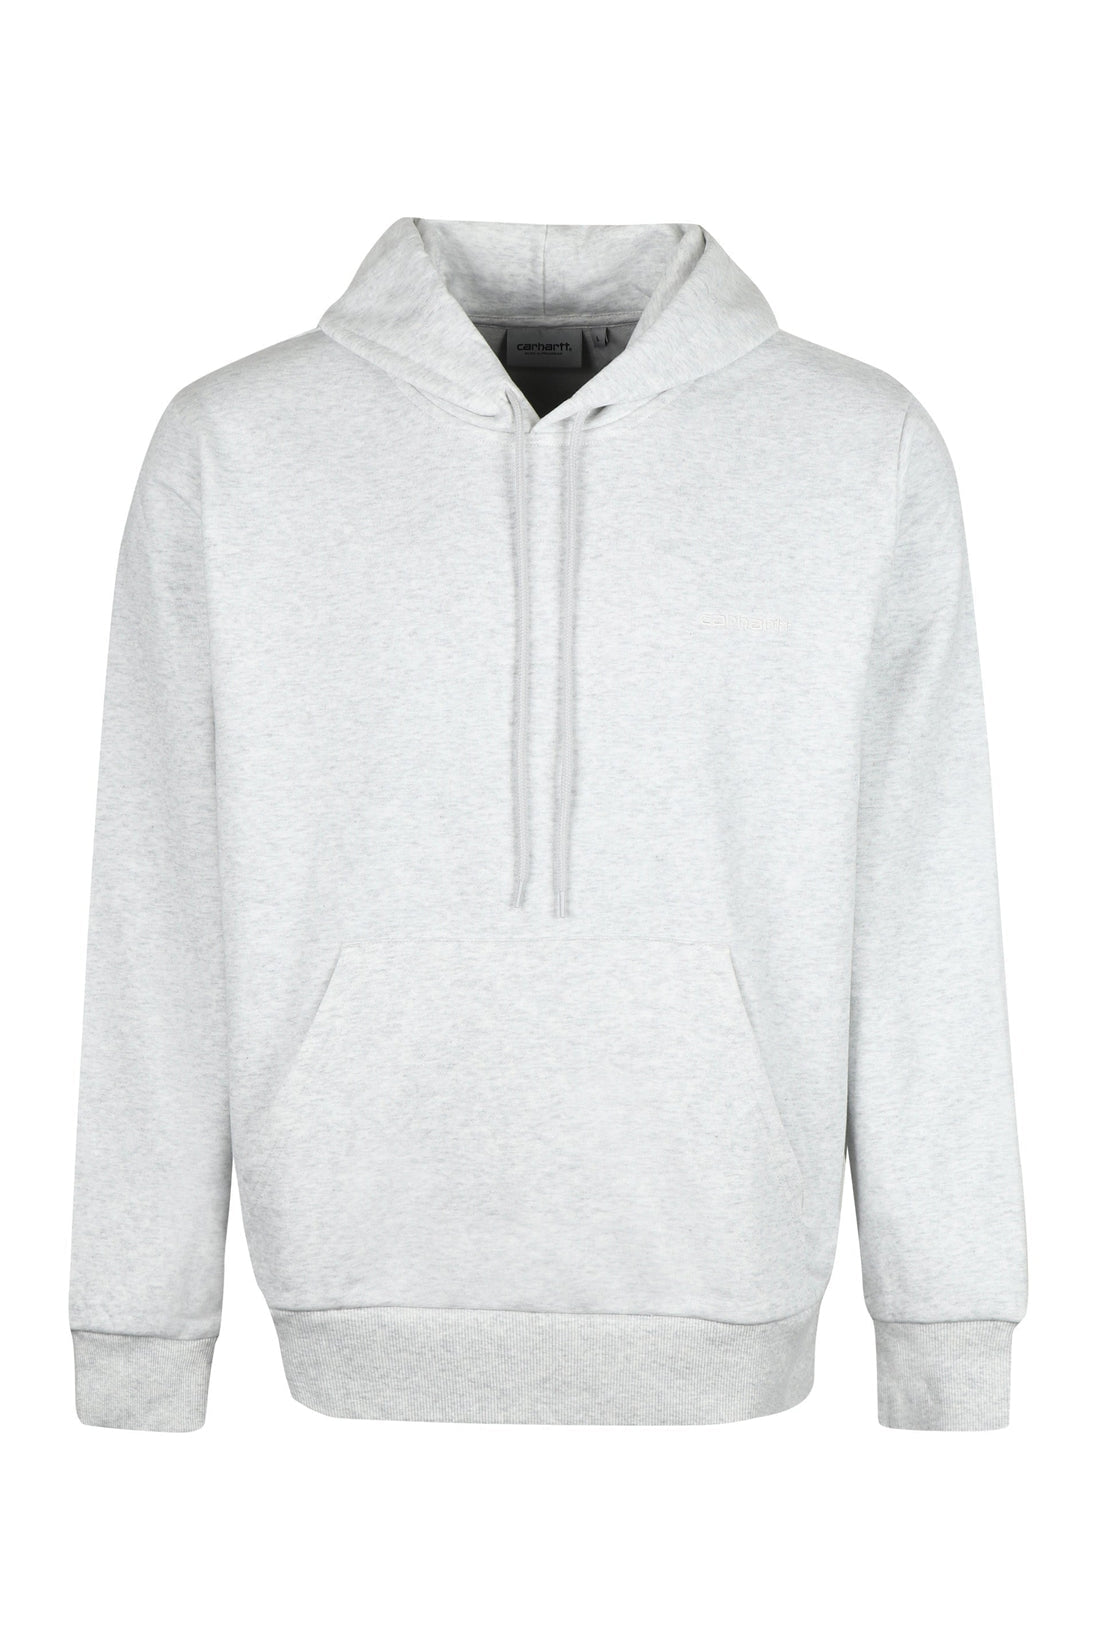 Carhartt-OUTLET-SALE-Hooded sweatshirt-ARCHIVIST